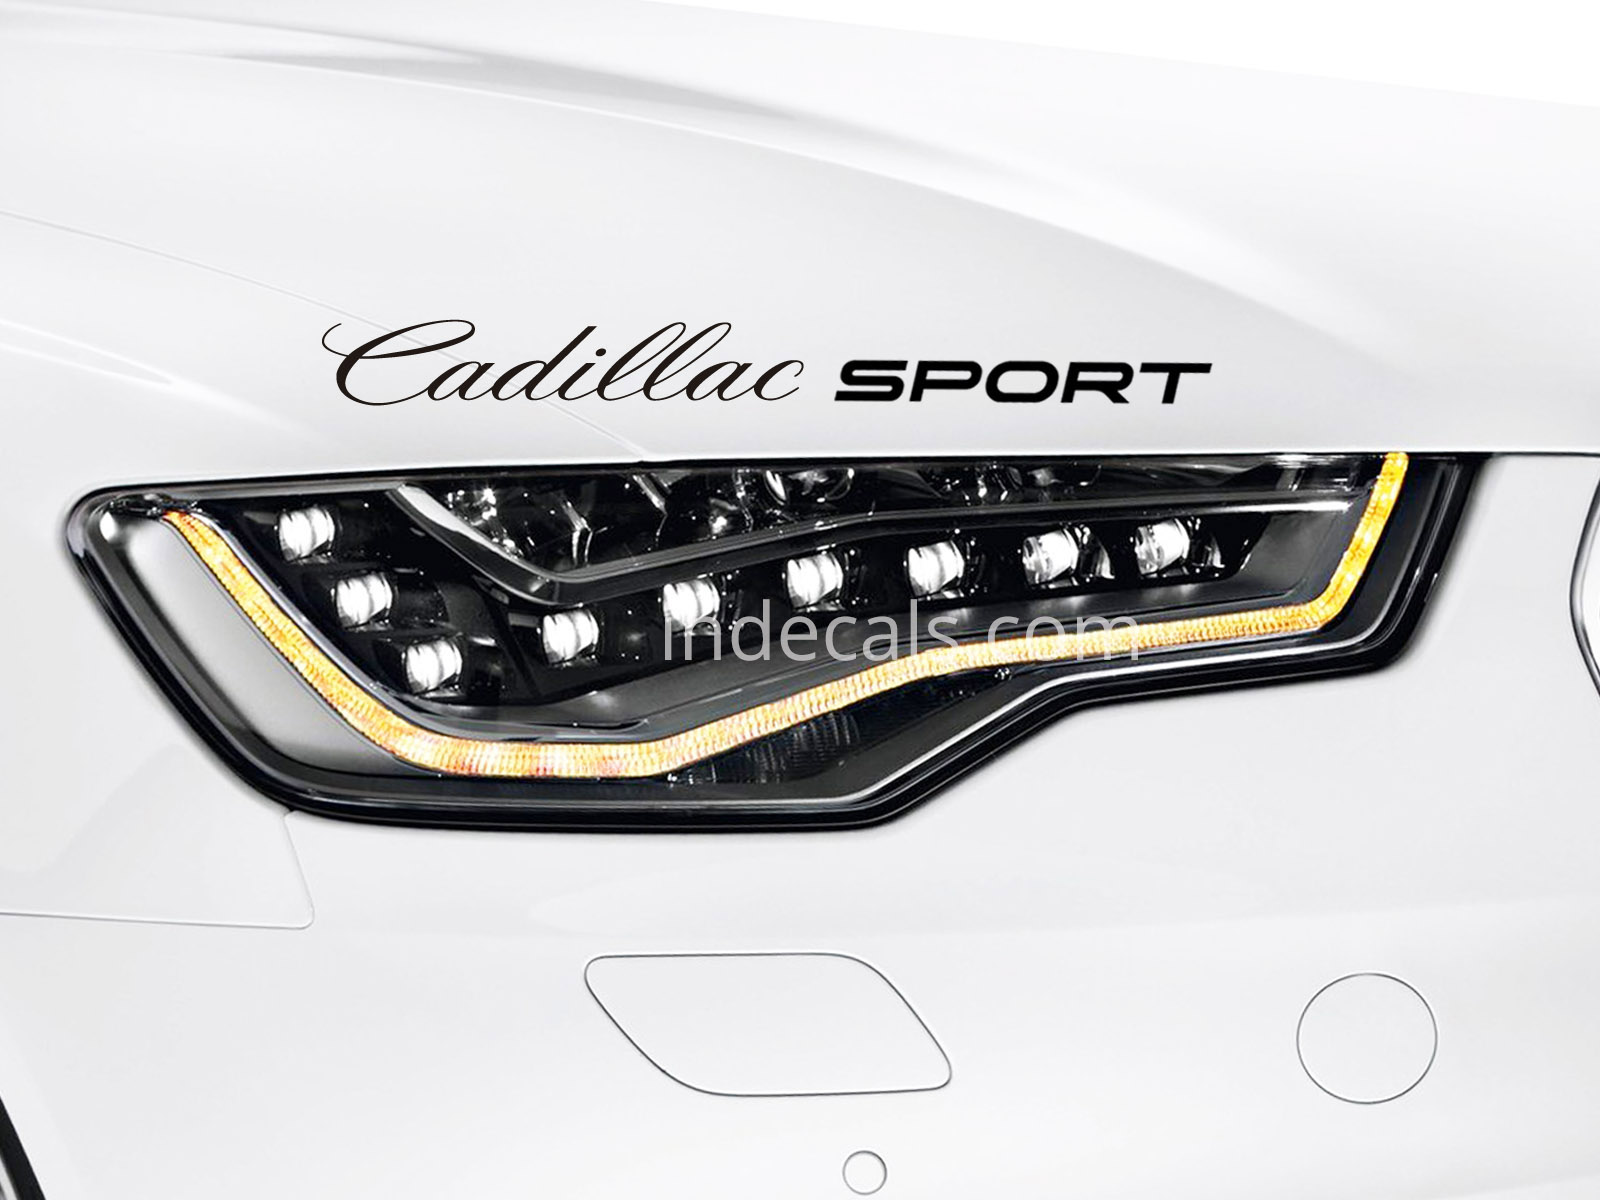 1 x Cadillac Sport Sticker - Black